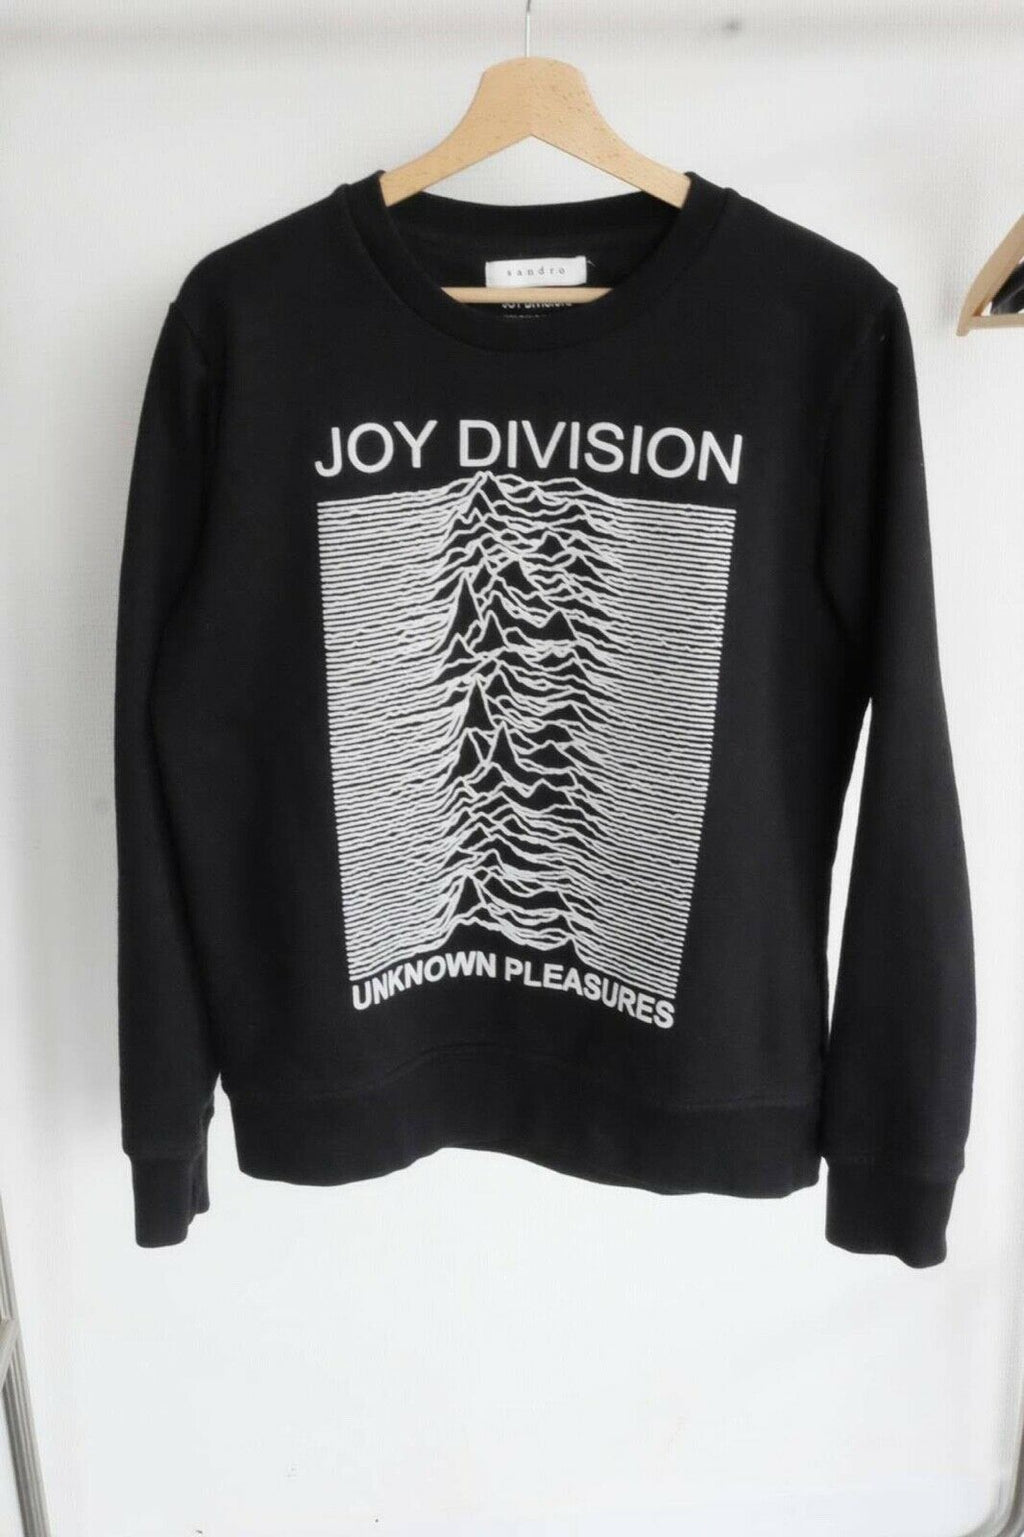  Joy Division Unknown Pleasures Sweater  